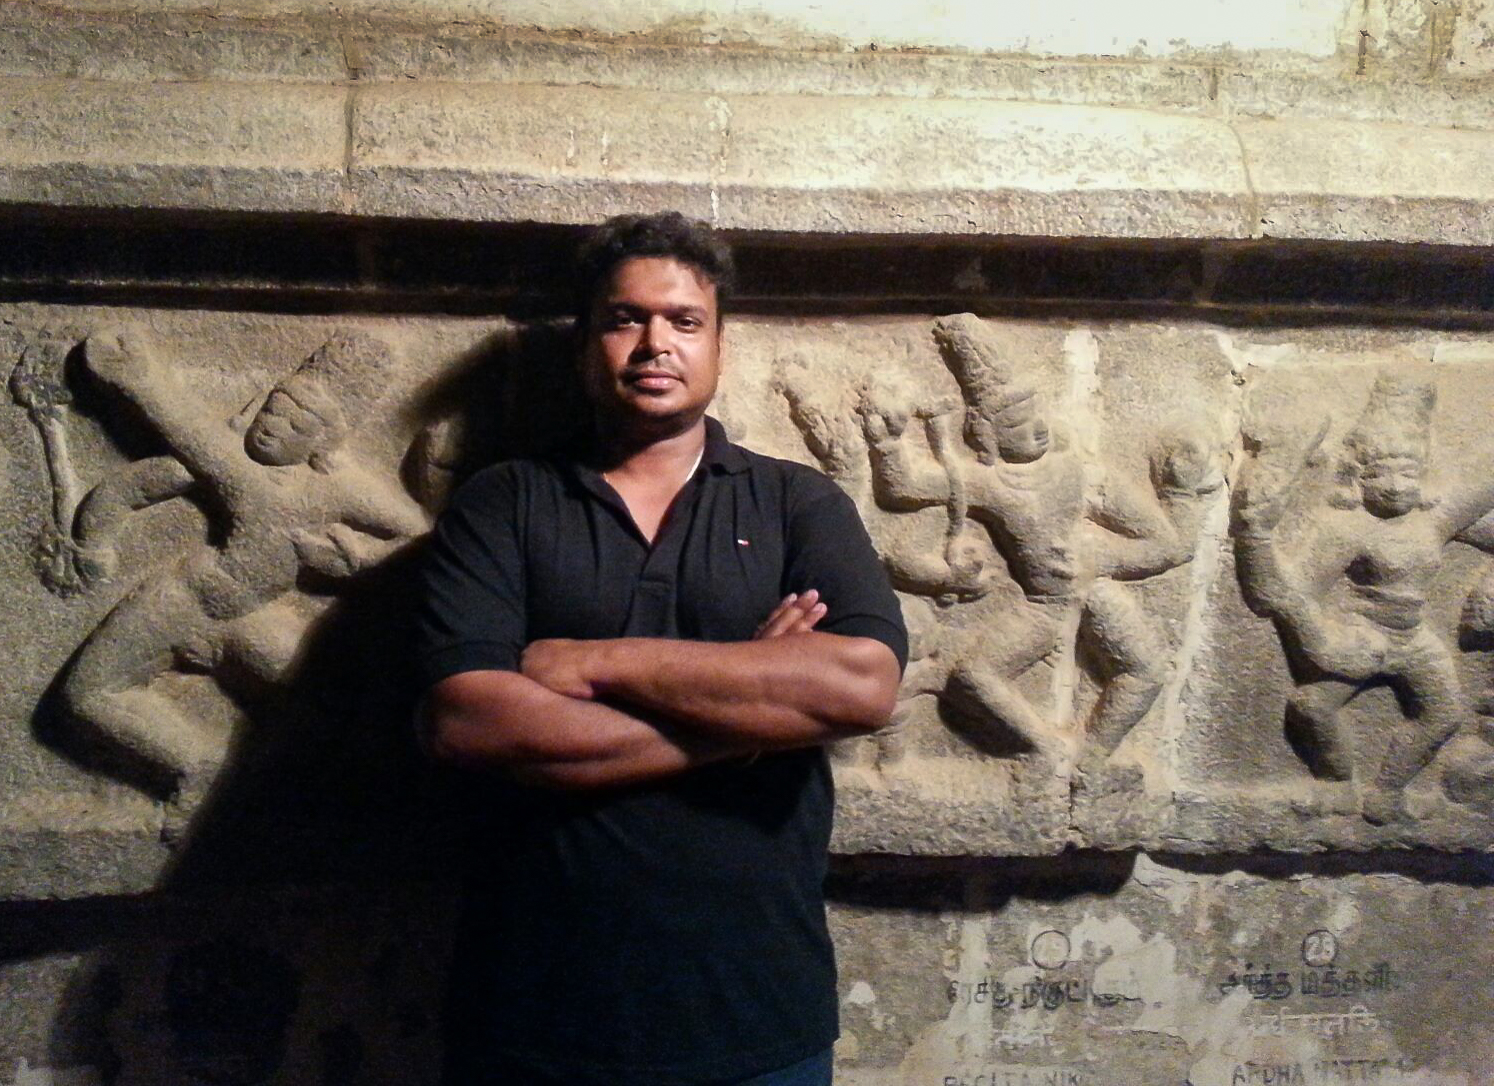 S. Vijay Kumar helps track down cultural artifacts stolen from India. Photo: Courtesy S. Vijay Kumar.